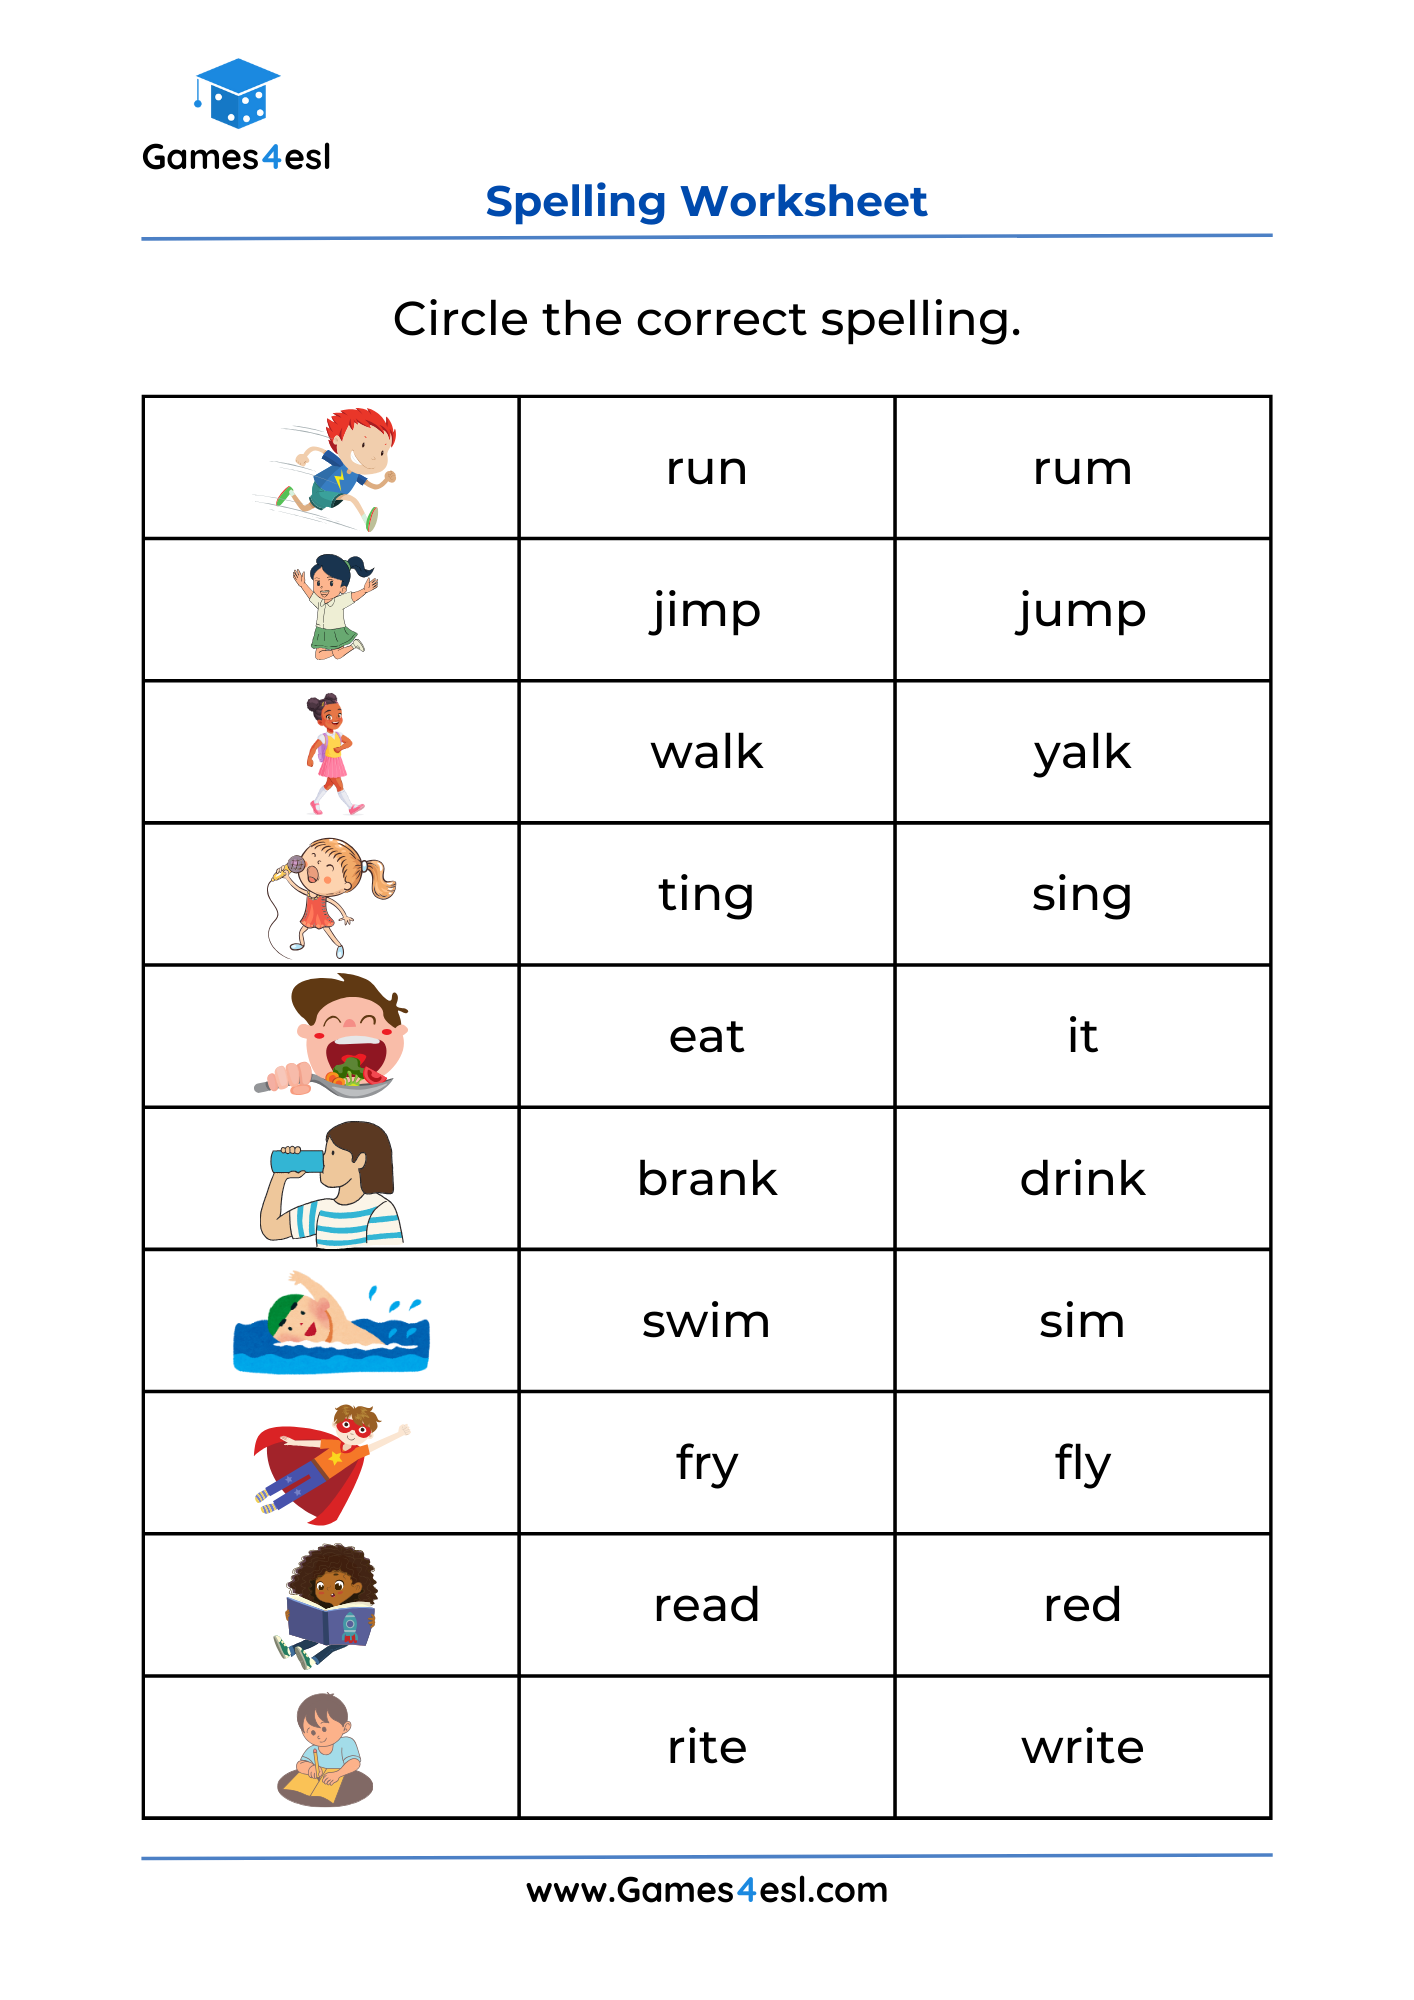 A grade 1 spelling worksheet.